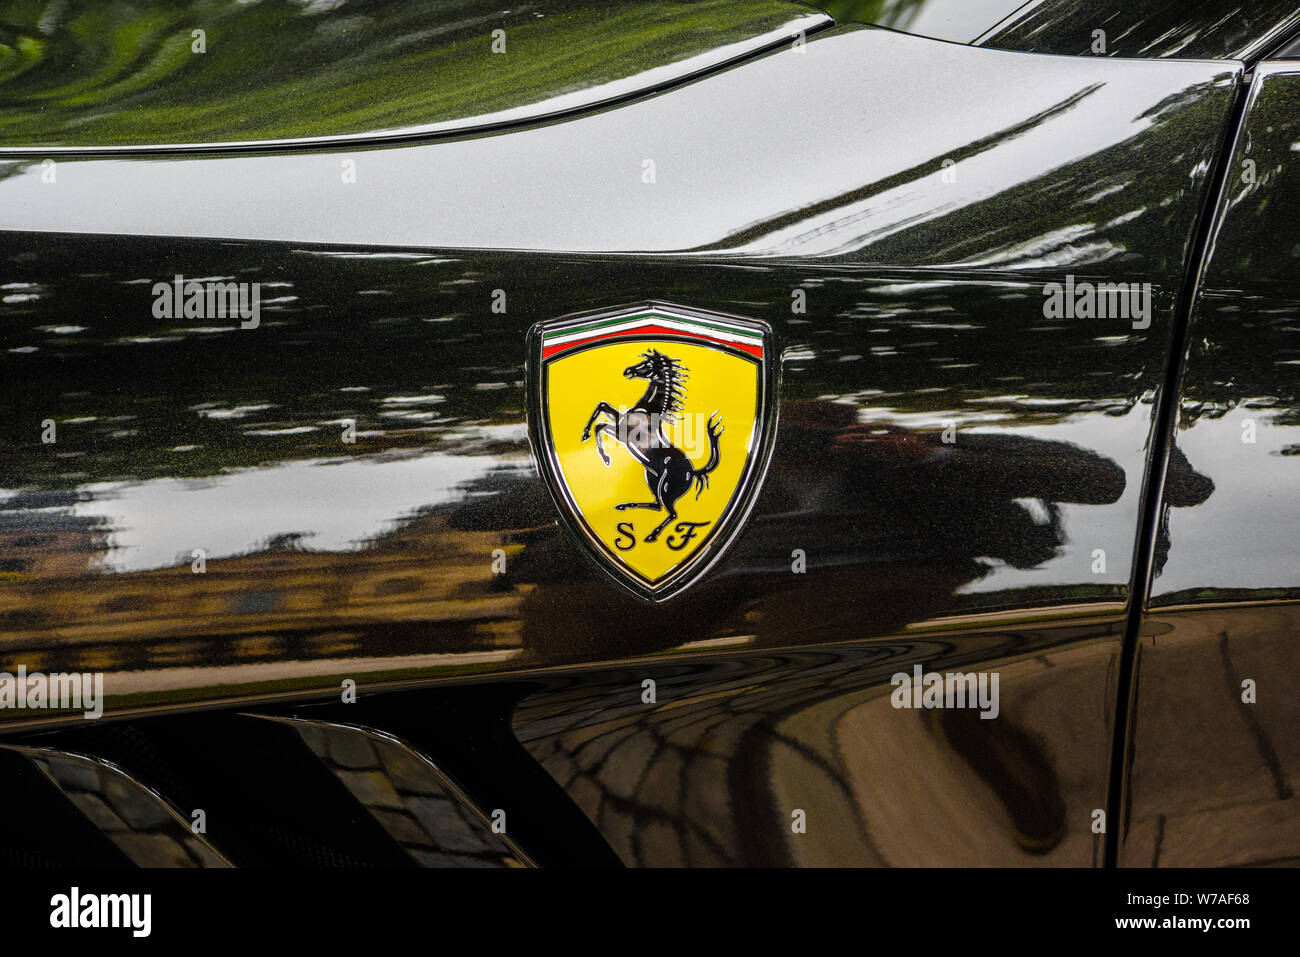 GERMANY, FULDA - JUL 2019: A close-up of the Ferrari logo on a black car. Stock Photo